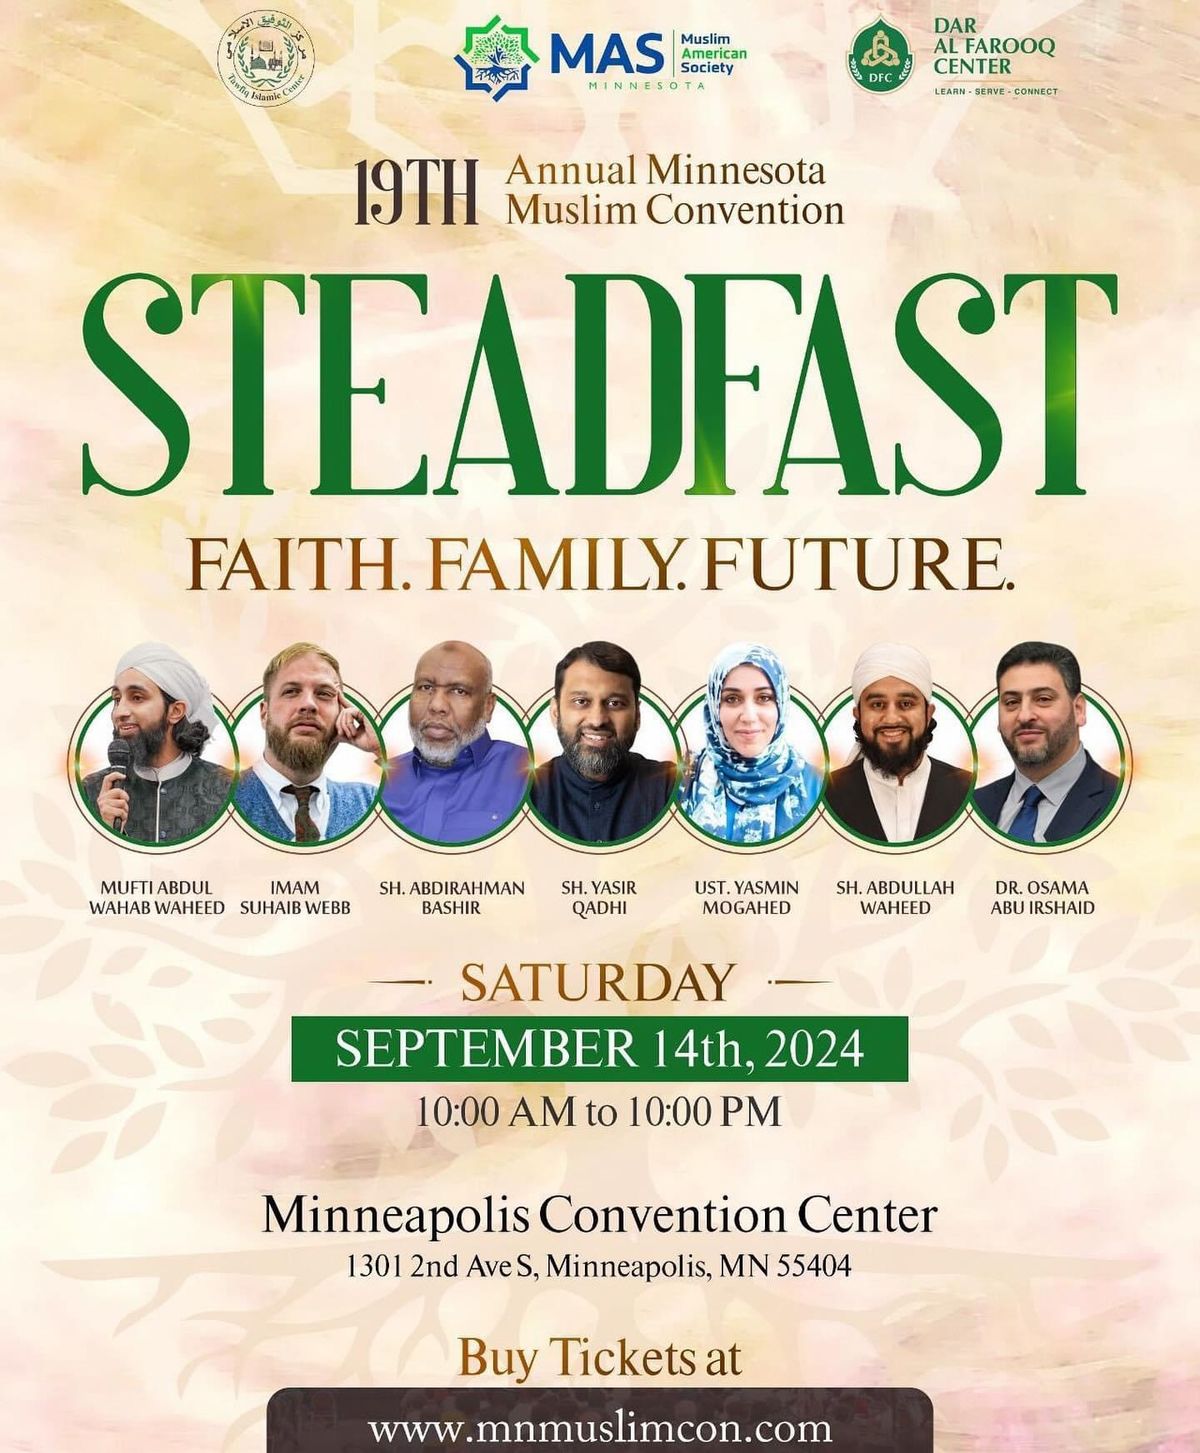 19th Annual Minnesota Muslim Convention